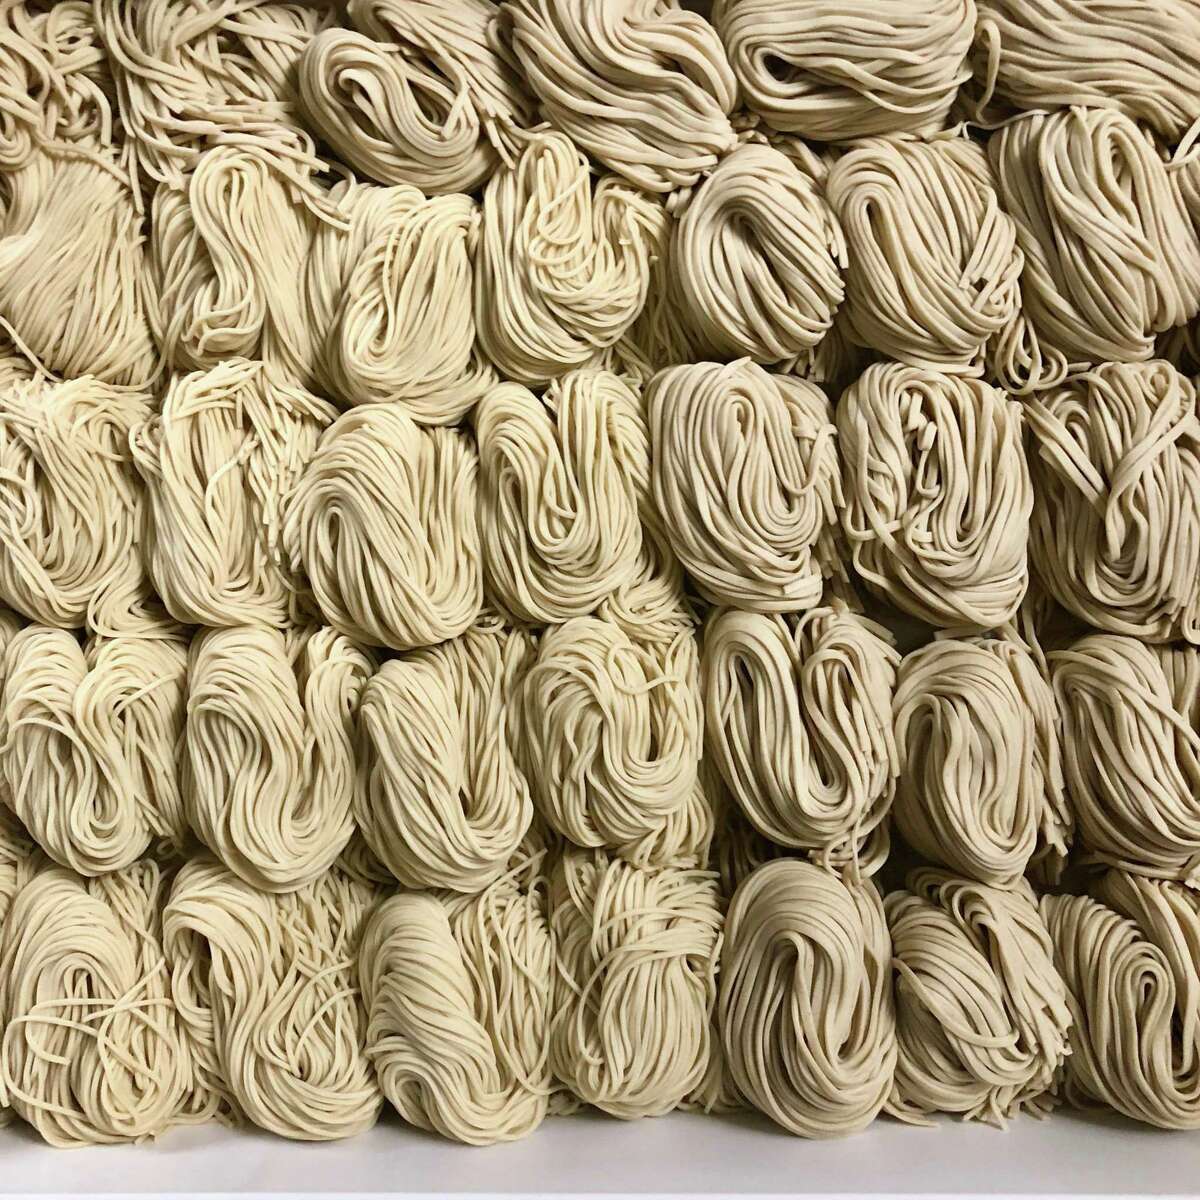 Erik Sun's forthcoming SoMa restaurant will serve fresh ramen noodles made in-house.